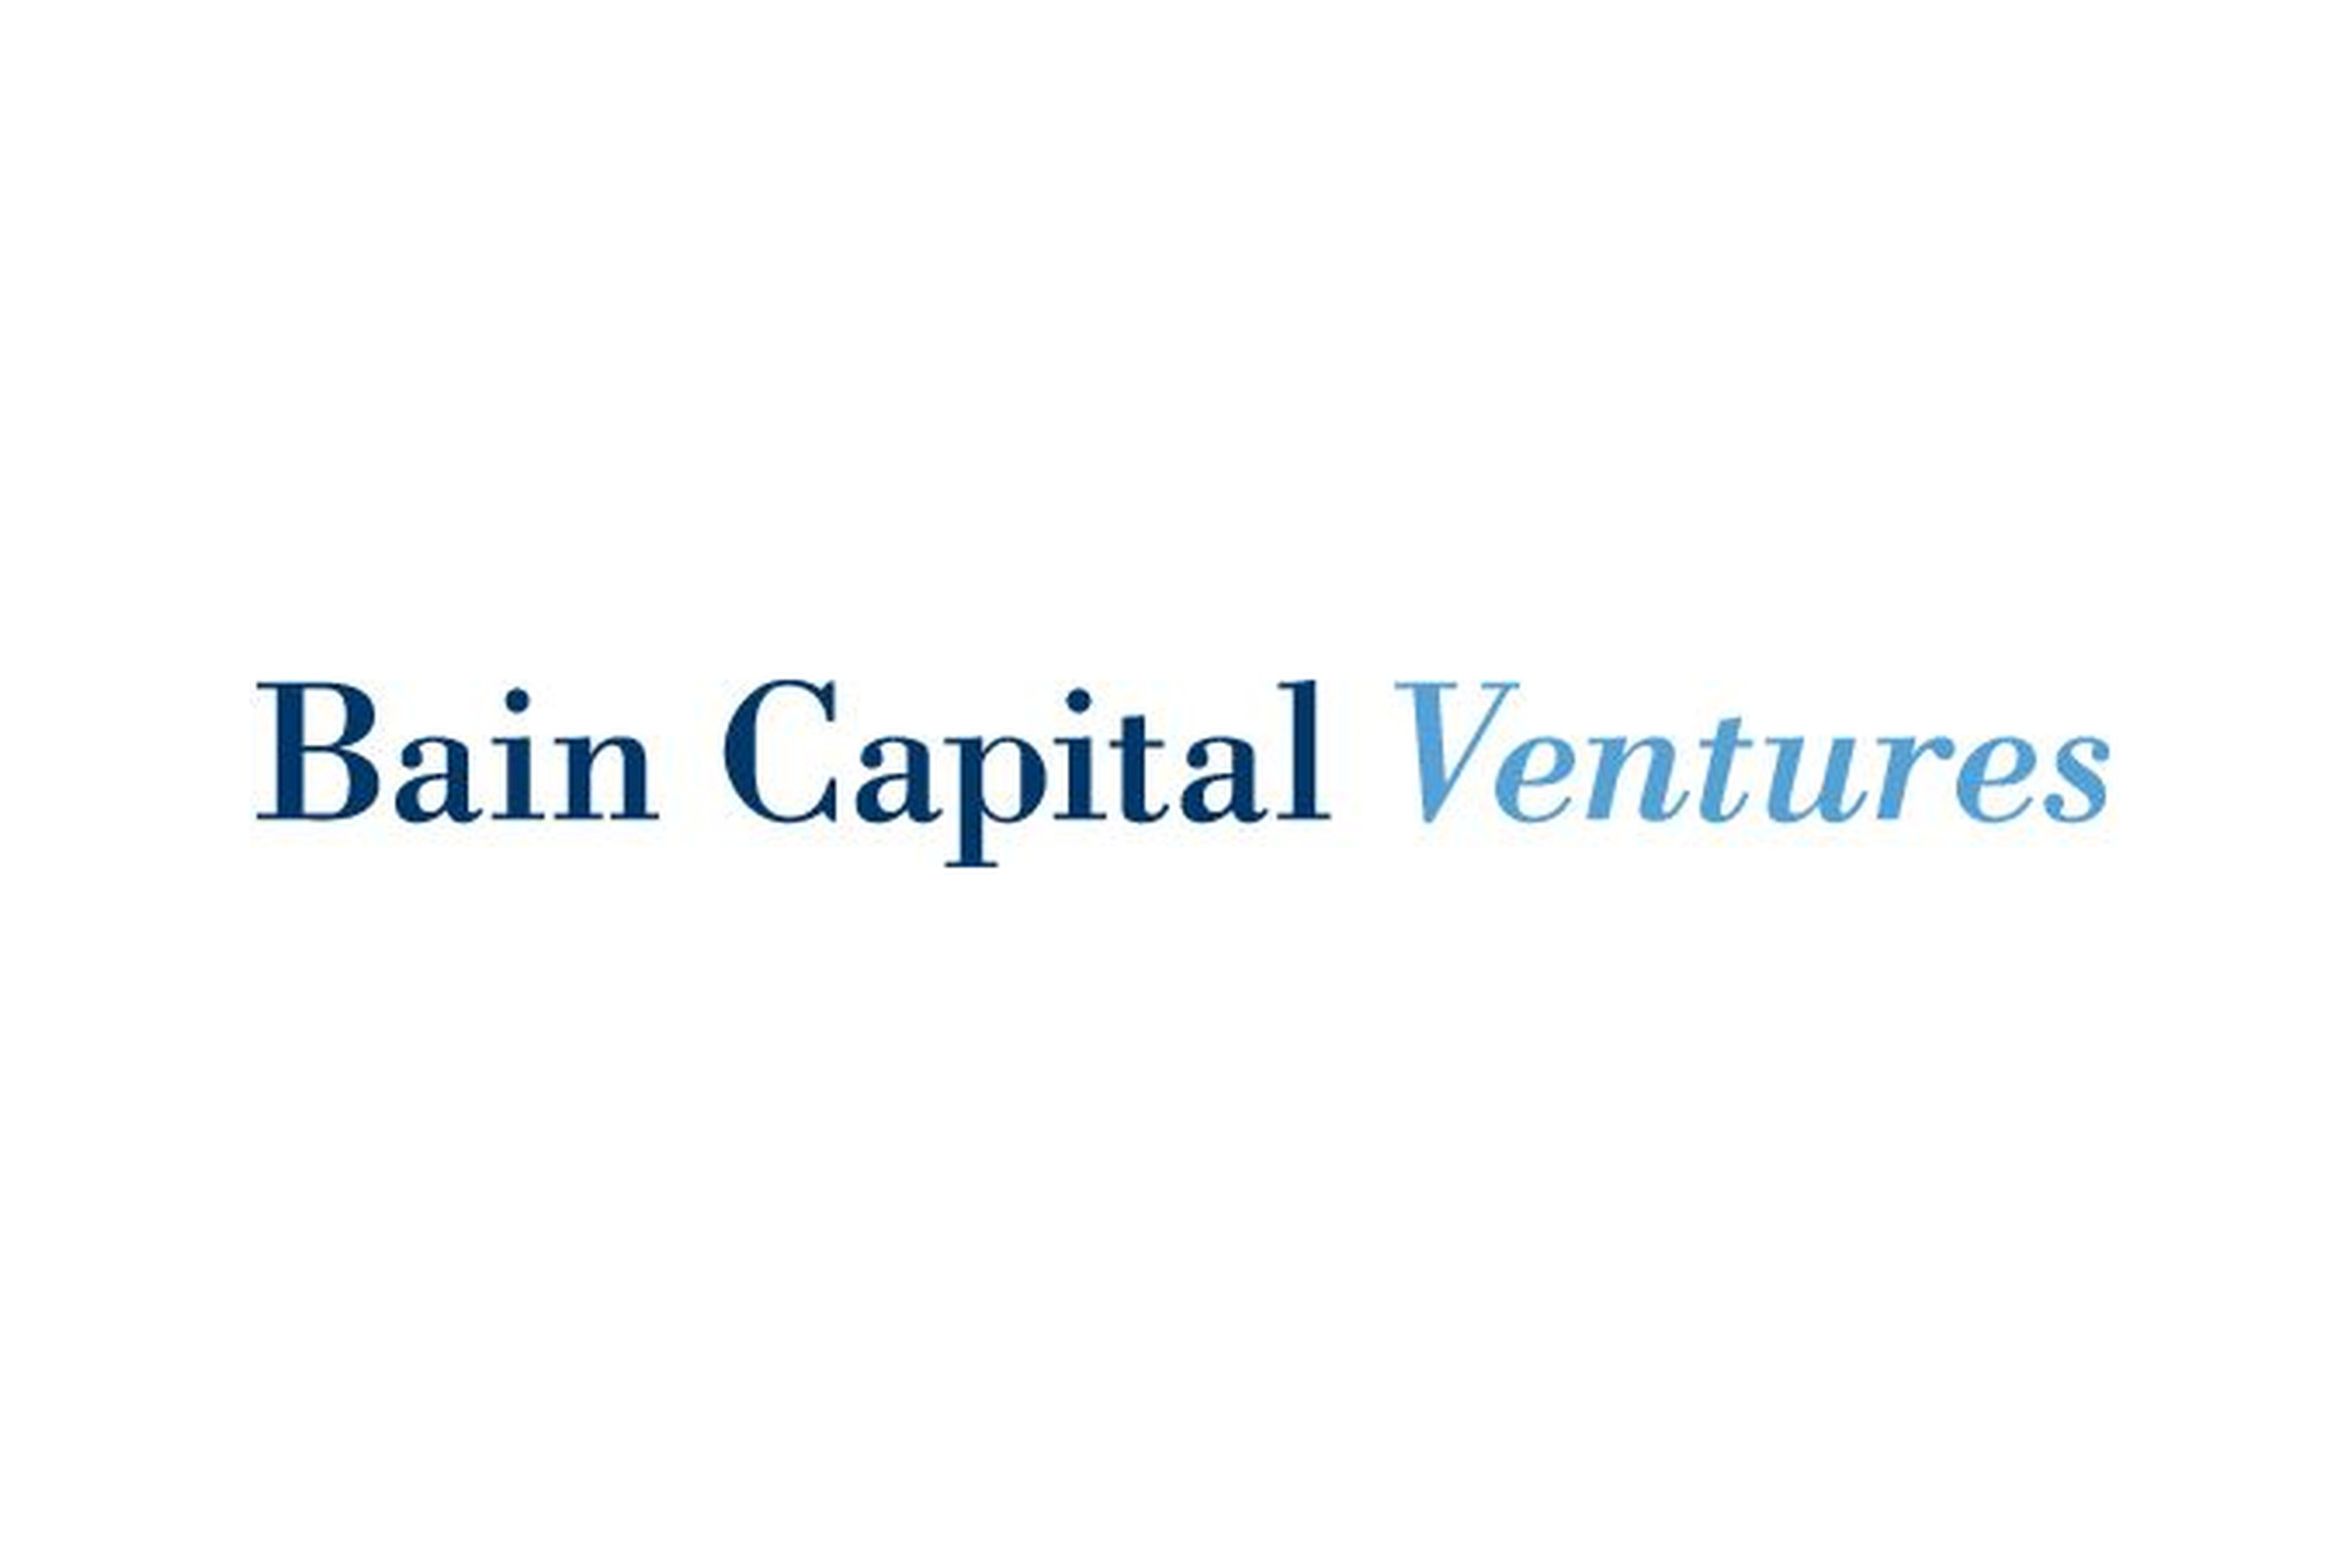 bain capital ventures logo